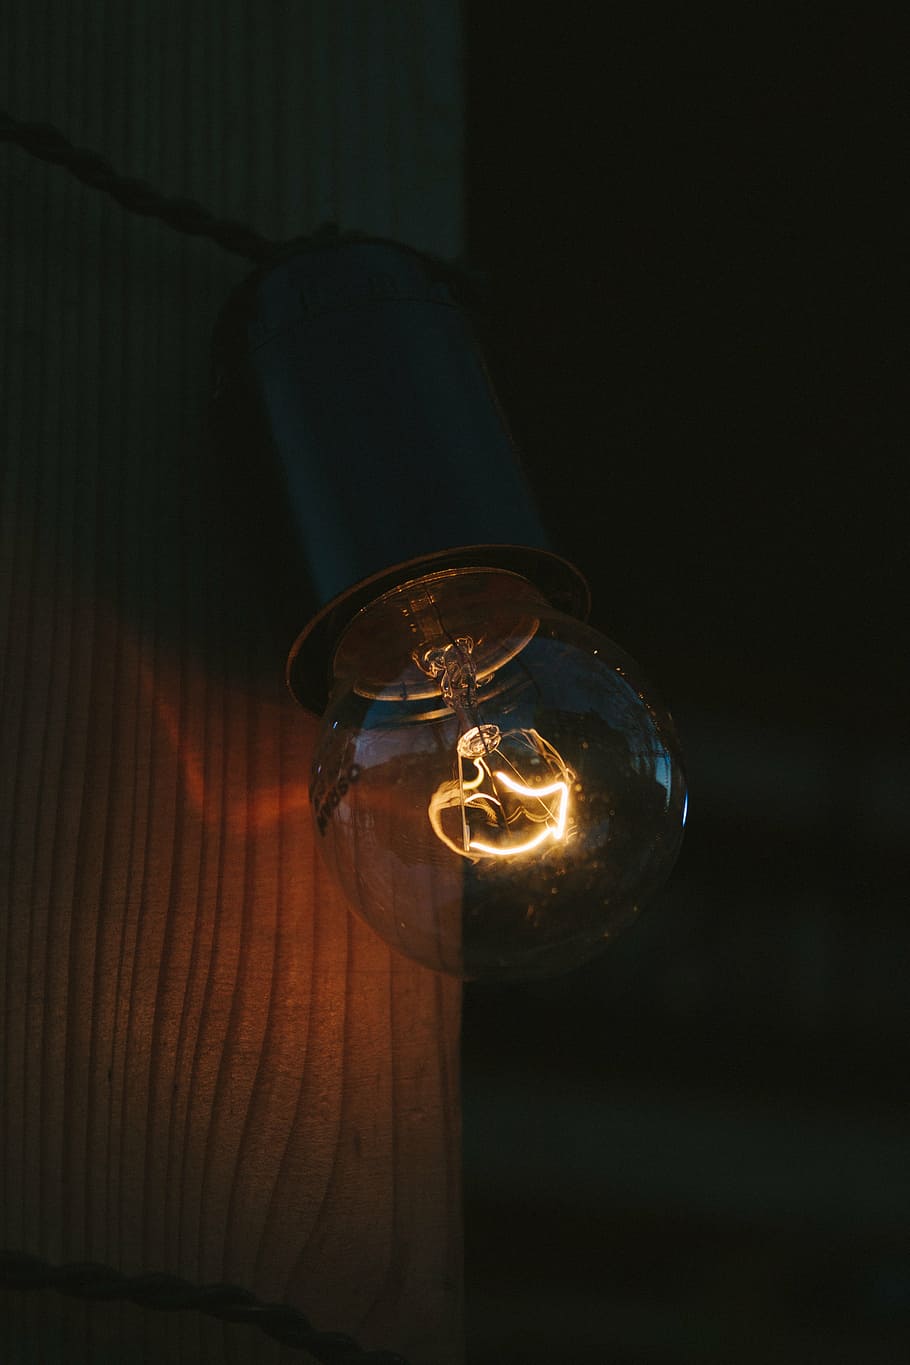 art, bulb, clear, close-up, dark, electricity, energy, evening